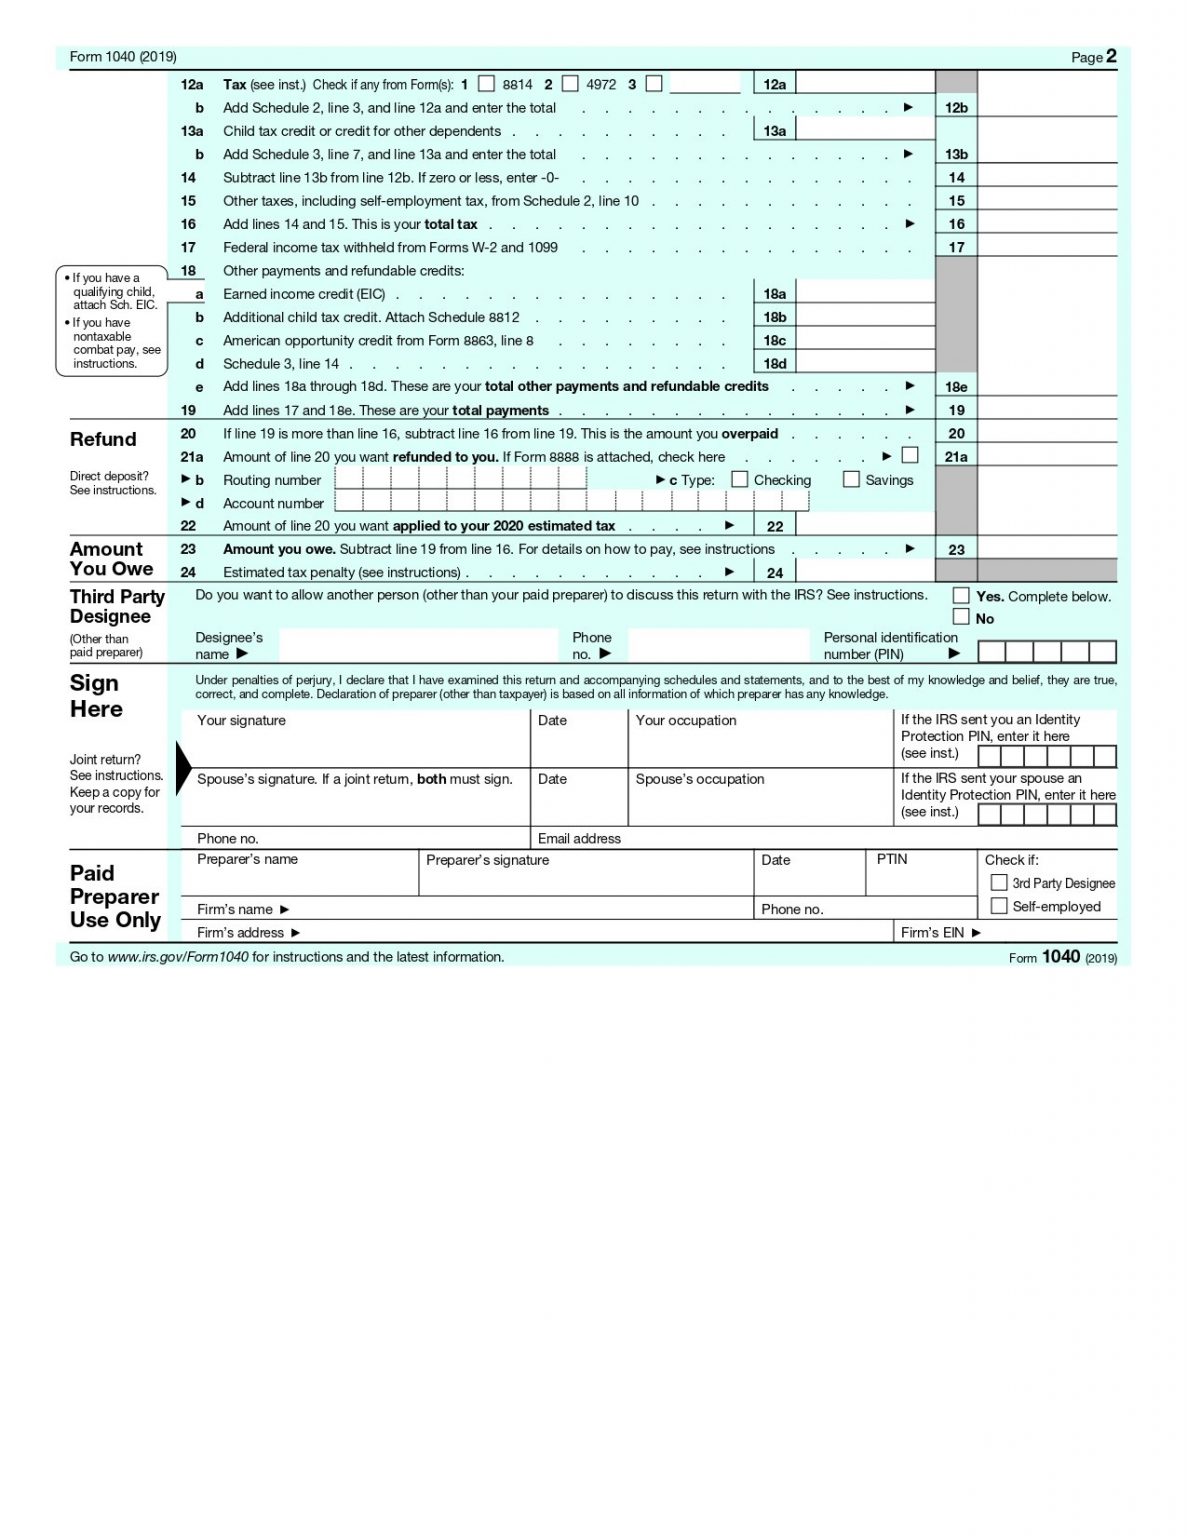 Form 1040 Us Individual Income Tax Return 2019 Mbcvirtual 4025